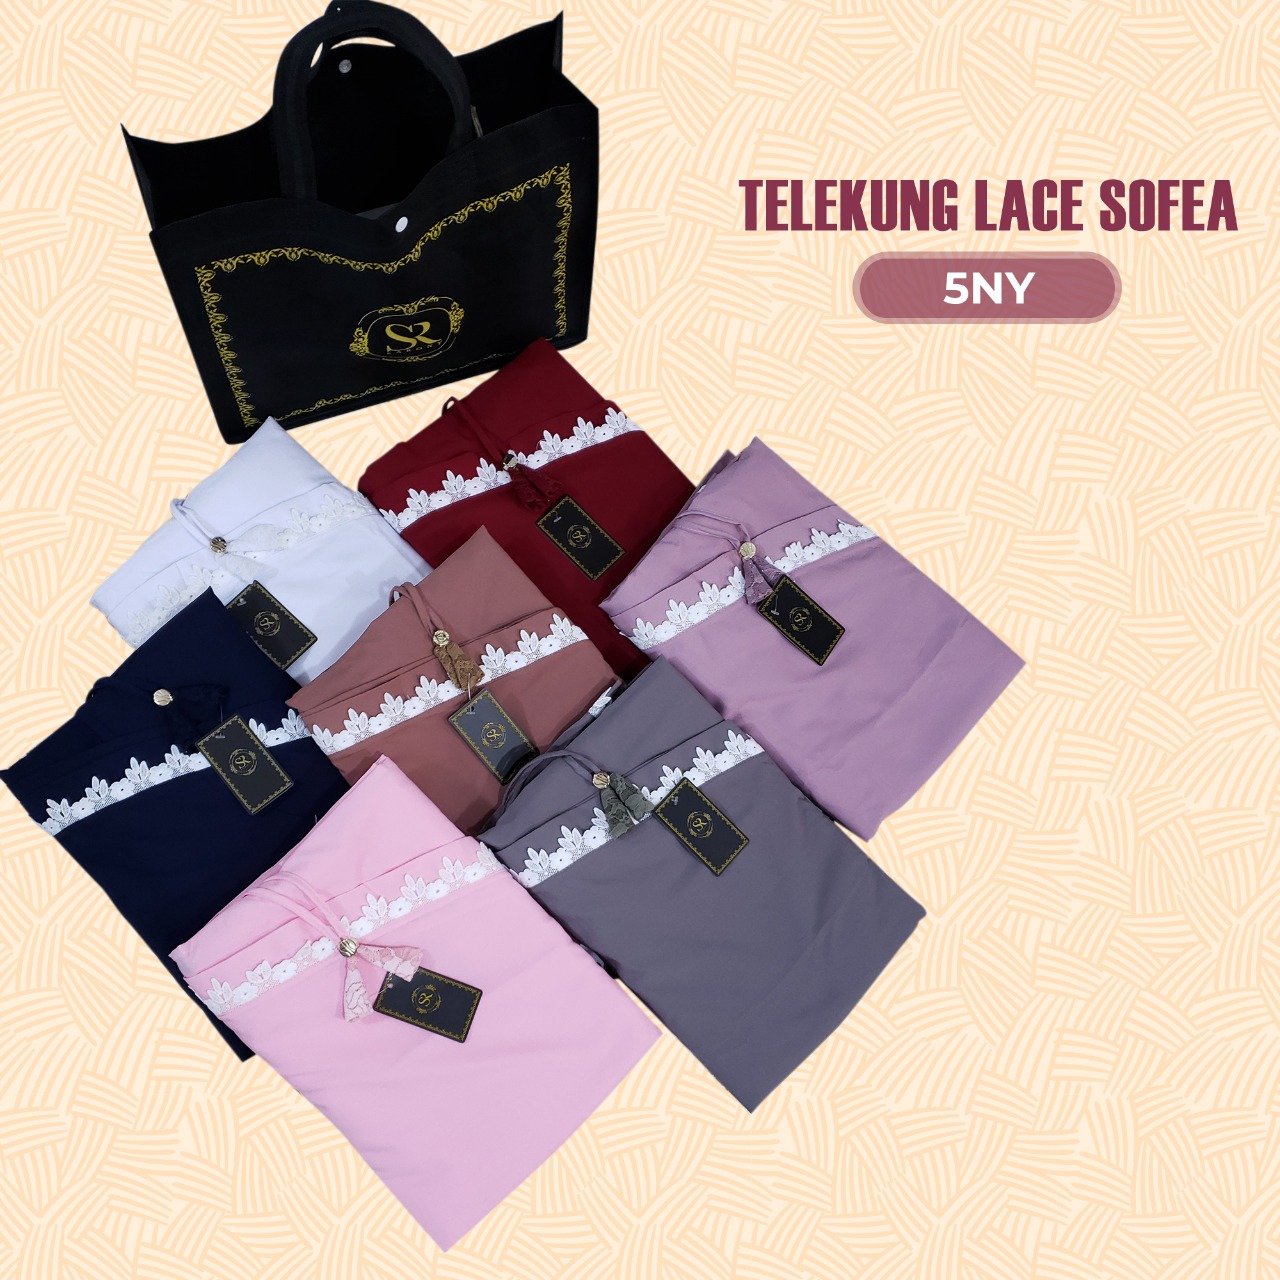 SARONY Telekung Lace Sofea Collection RM29